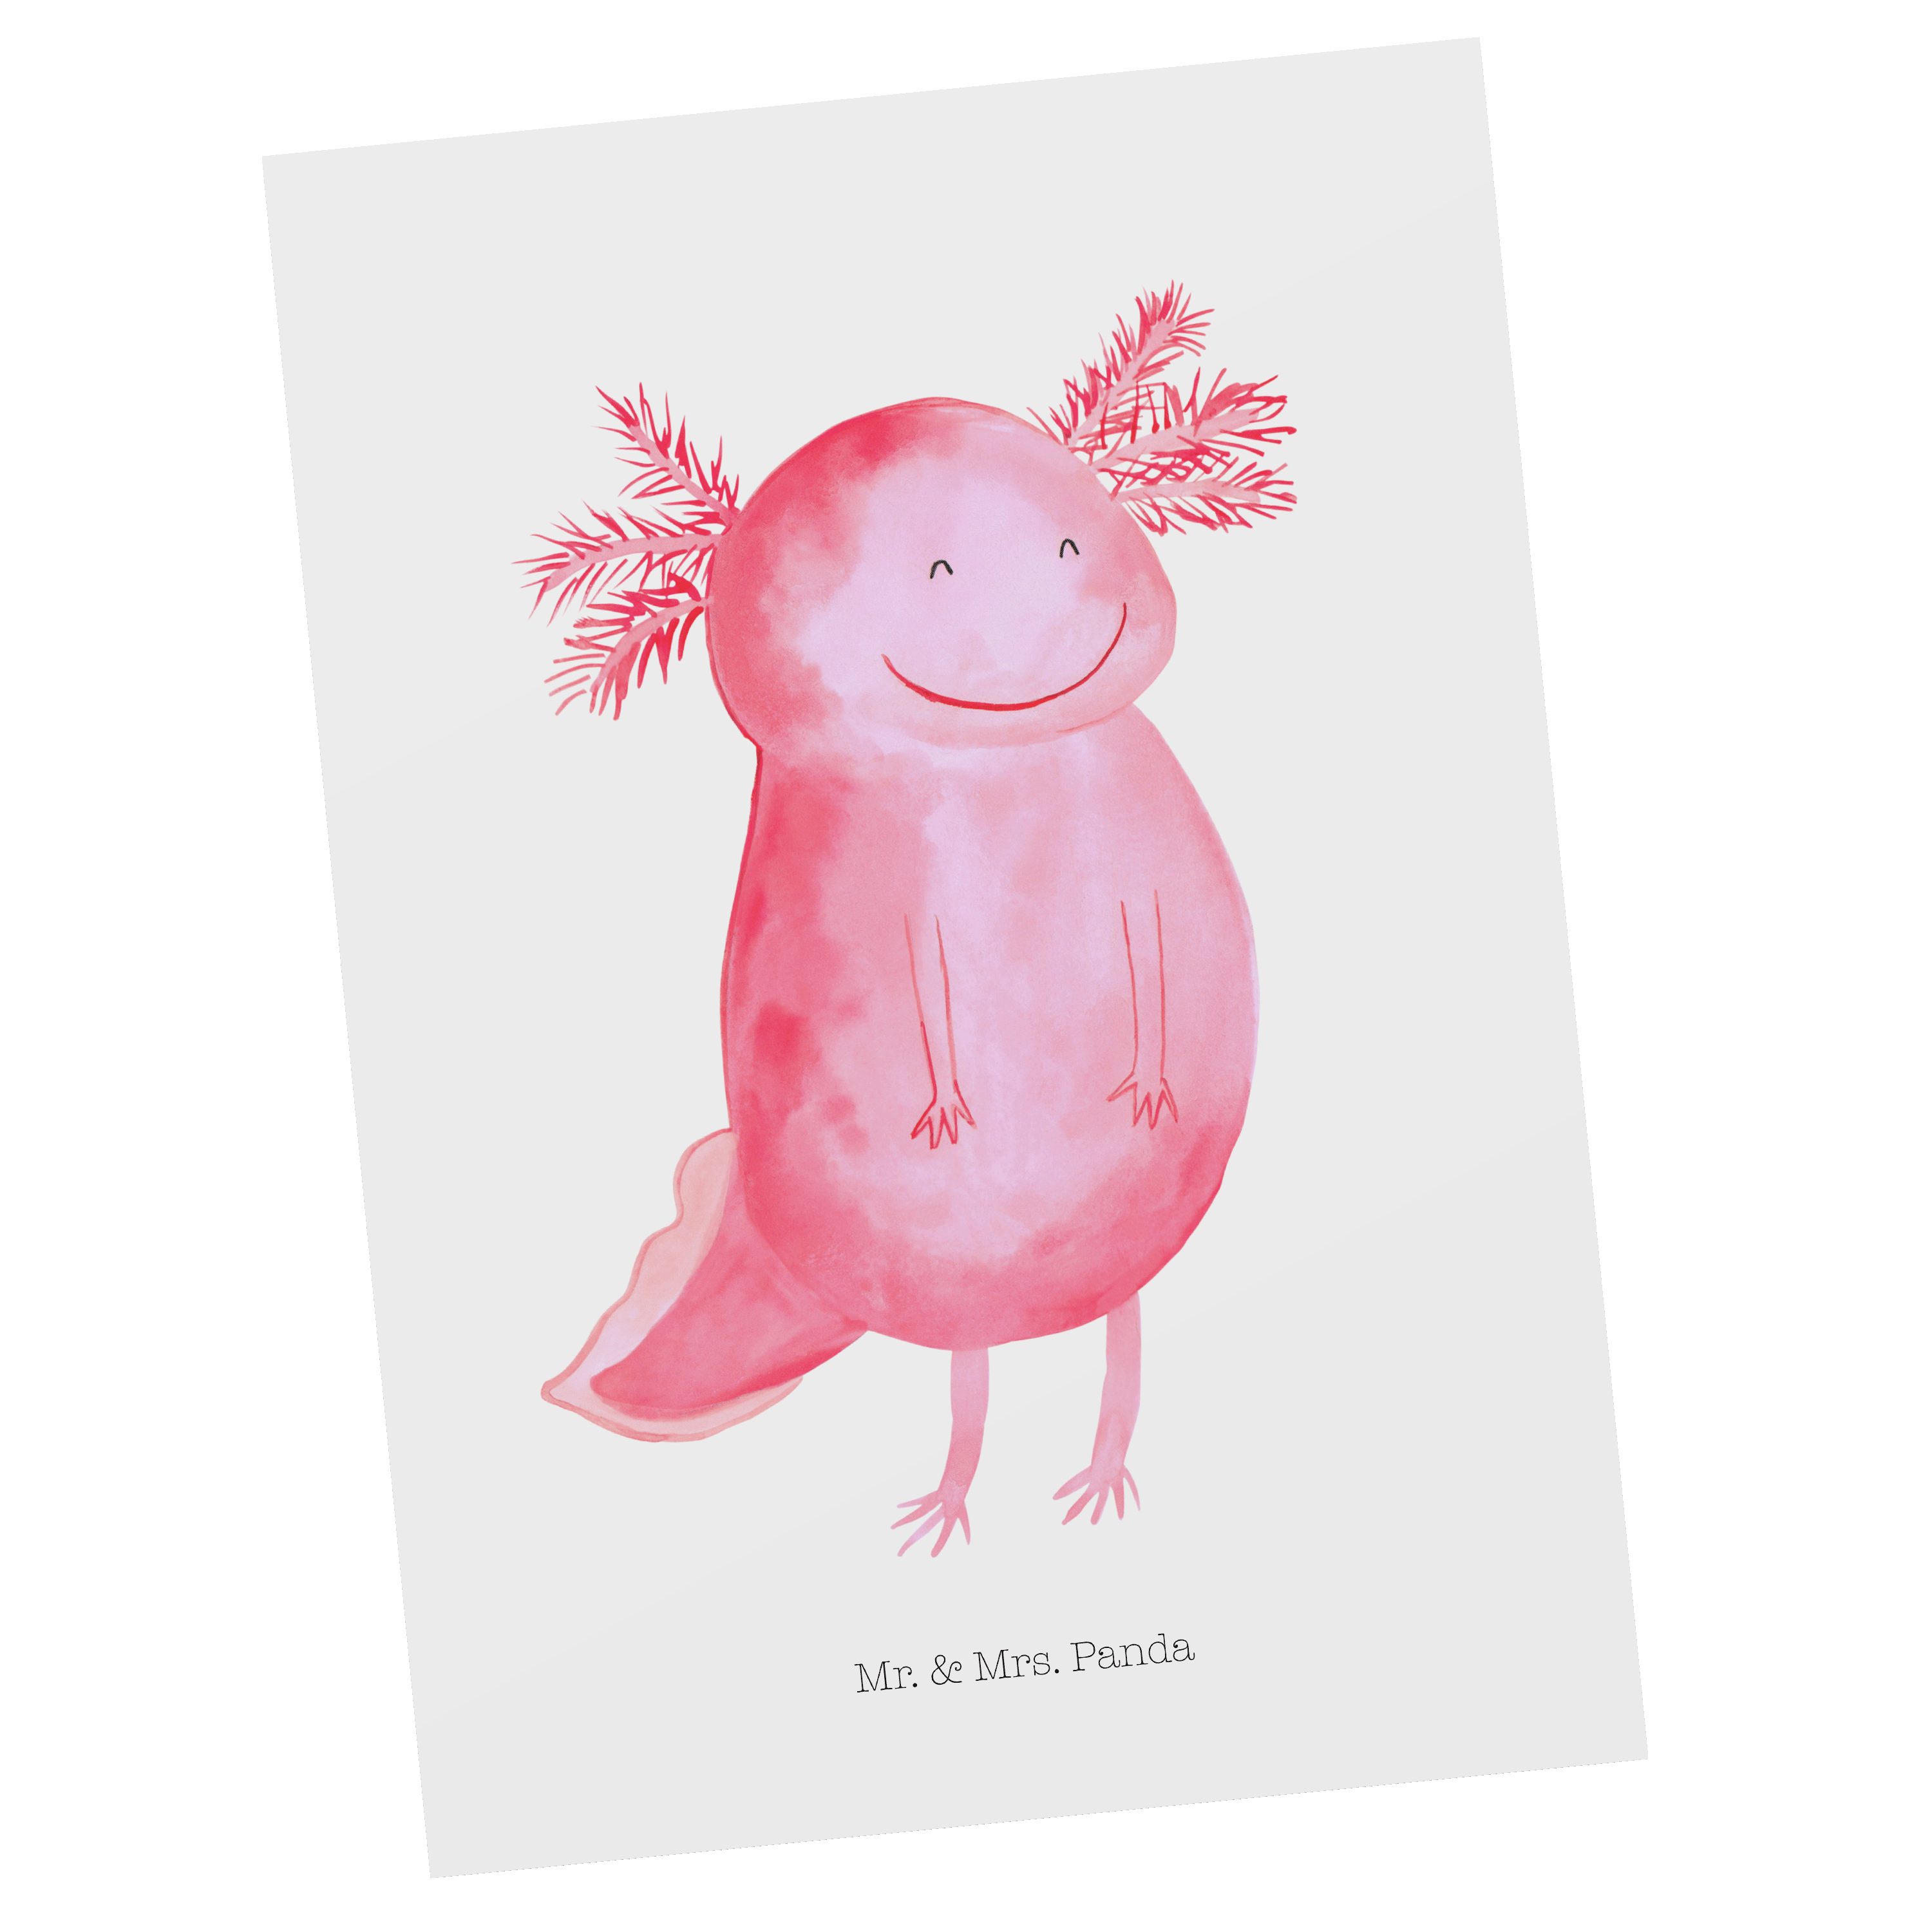 & Molch, Panda glücklich Lurch, Mrs. Laune Geschenk, - Karte, Mr. Postkarte gute Weiß - Axolotl